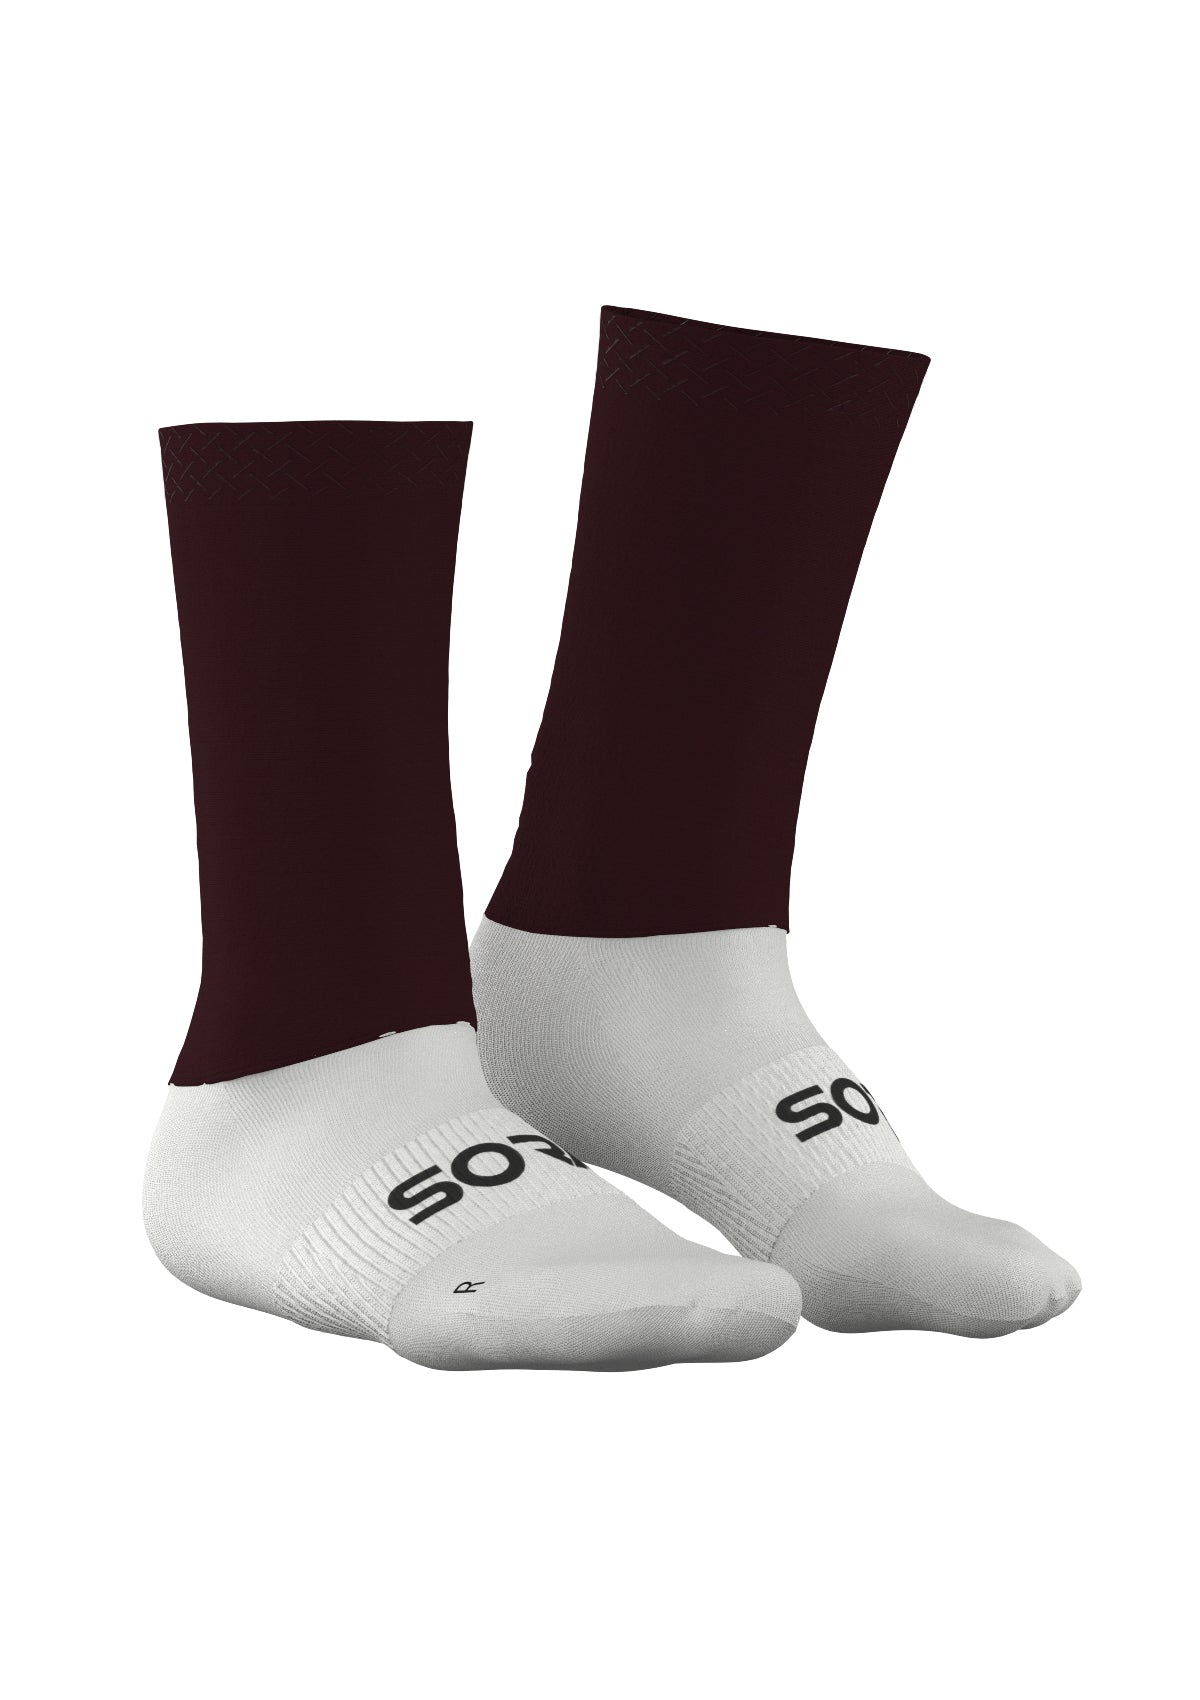 Aero Pro Light Sangria cycling socks